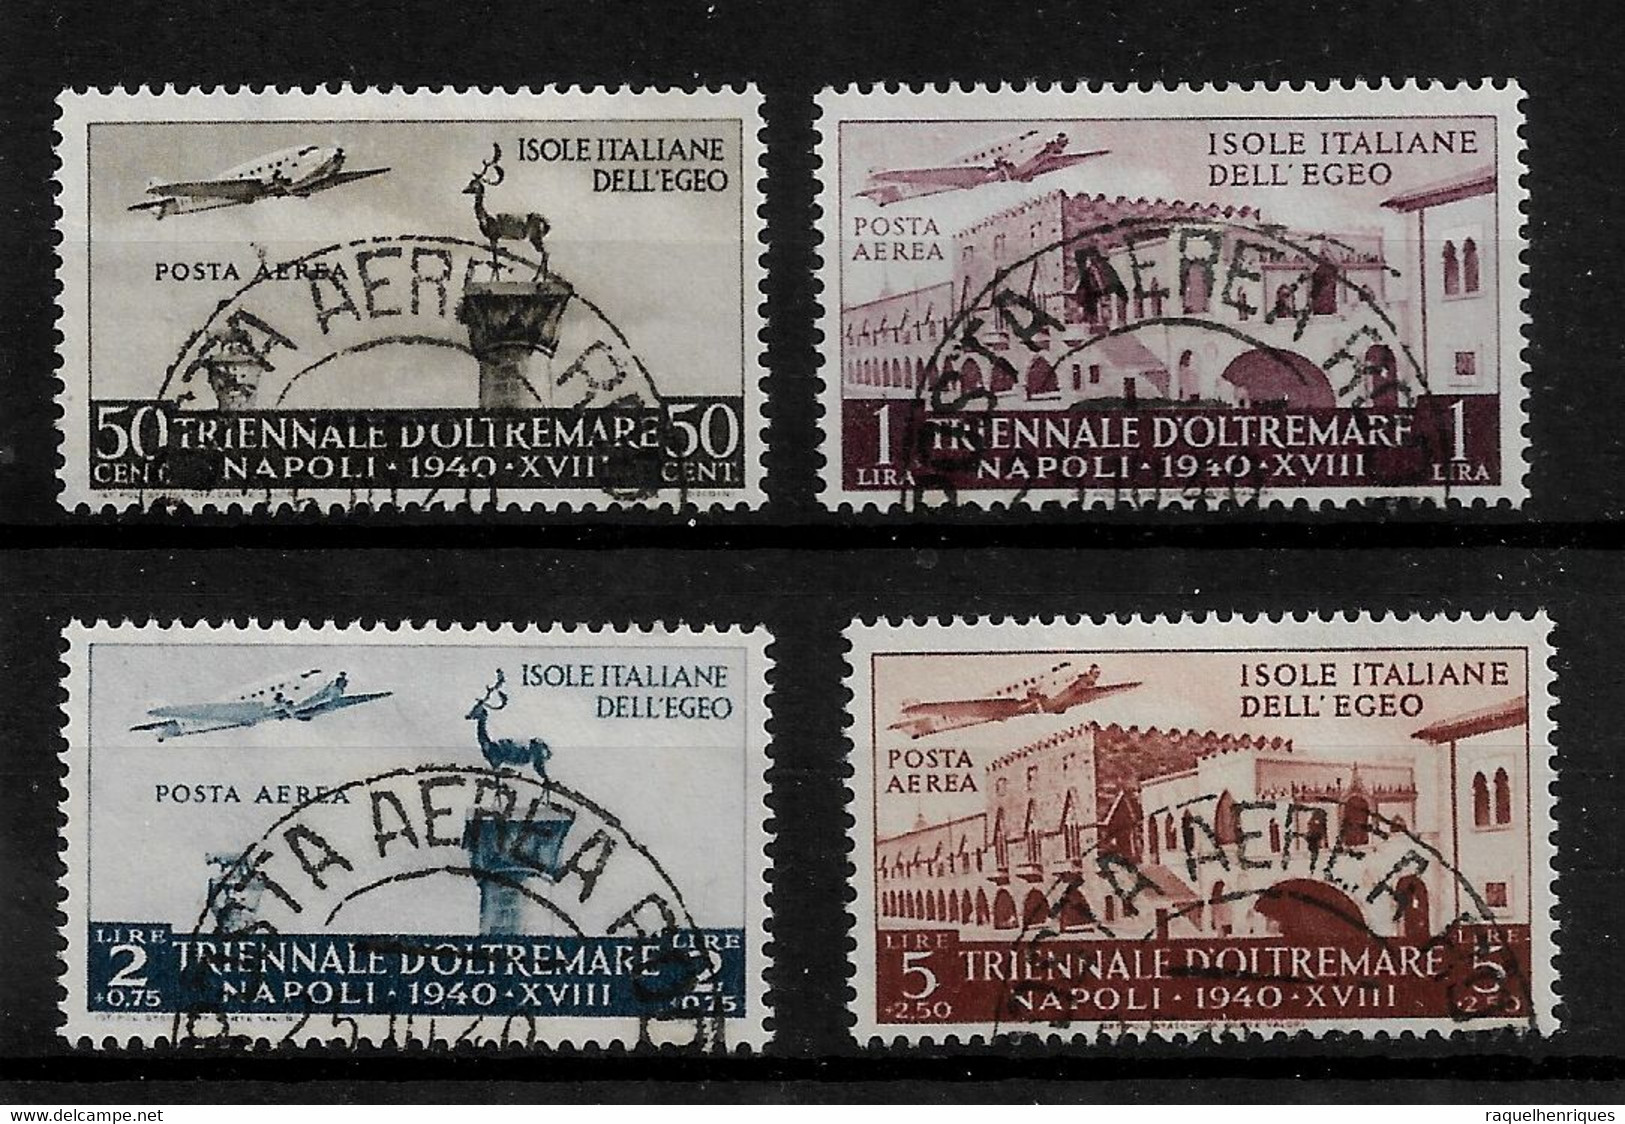 ITALY STAMP - AEGEAN ISLANDS - 1940 Airmail - Exhibition In Napoli SET USED (BA5#88) - Egée (Admin. Autonome)